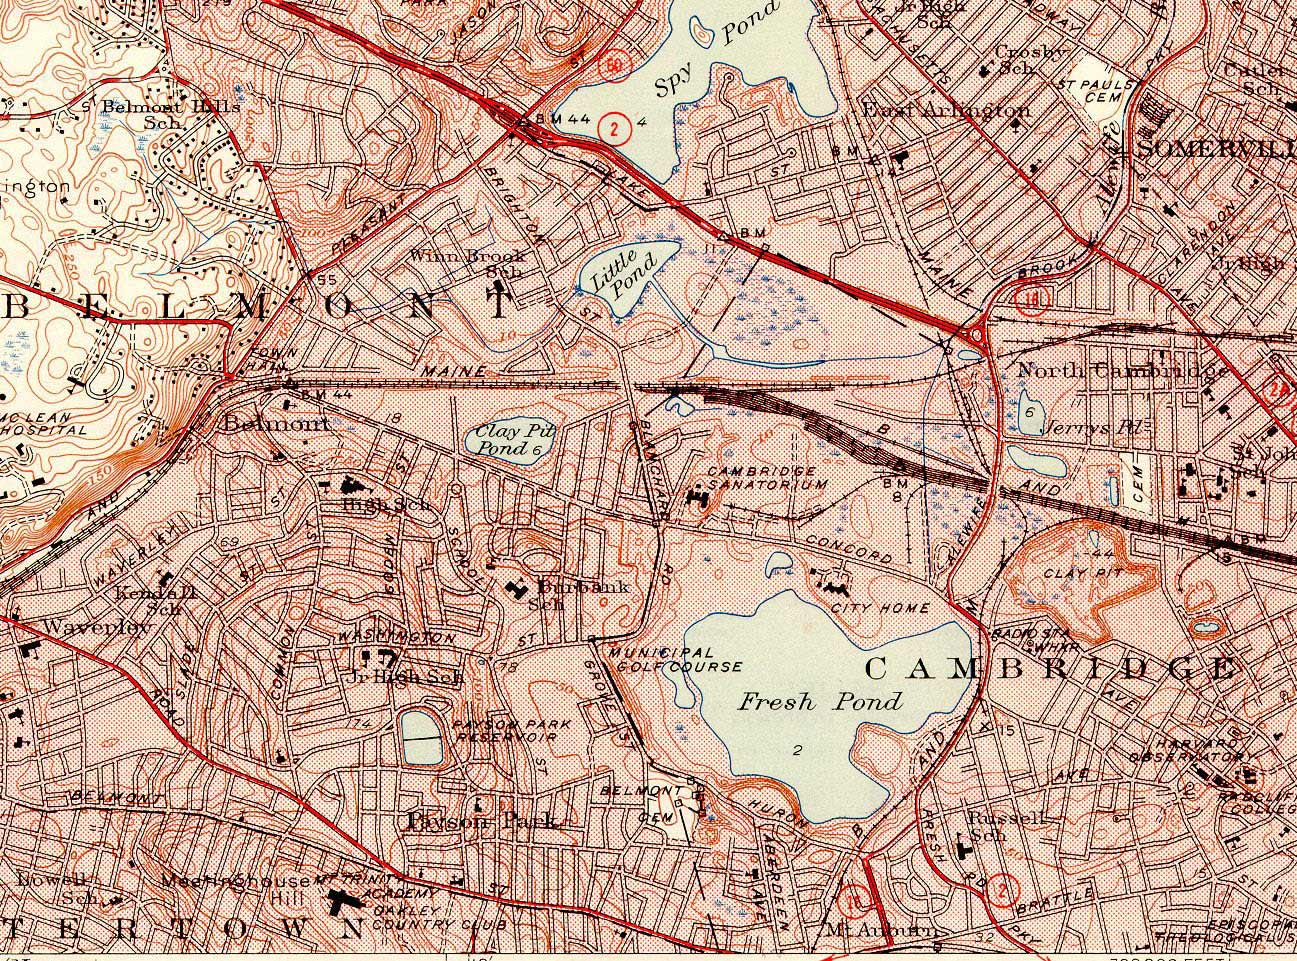 small 1946 map: Alewife Brook, Spy Pond, Fresh Pond